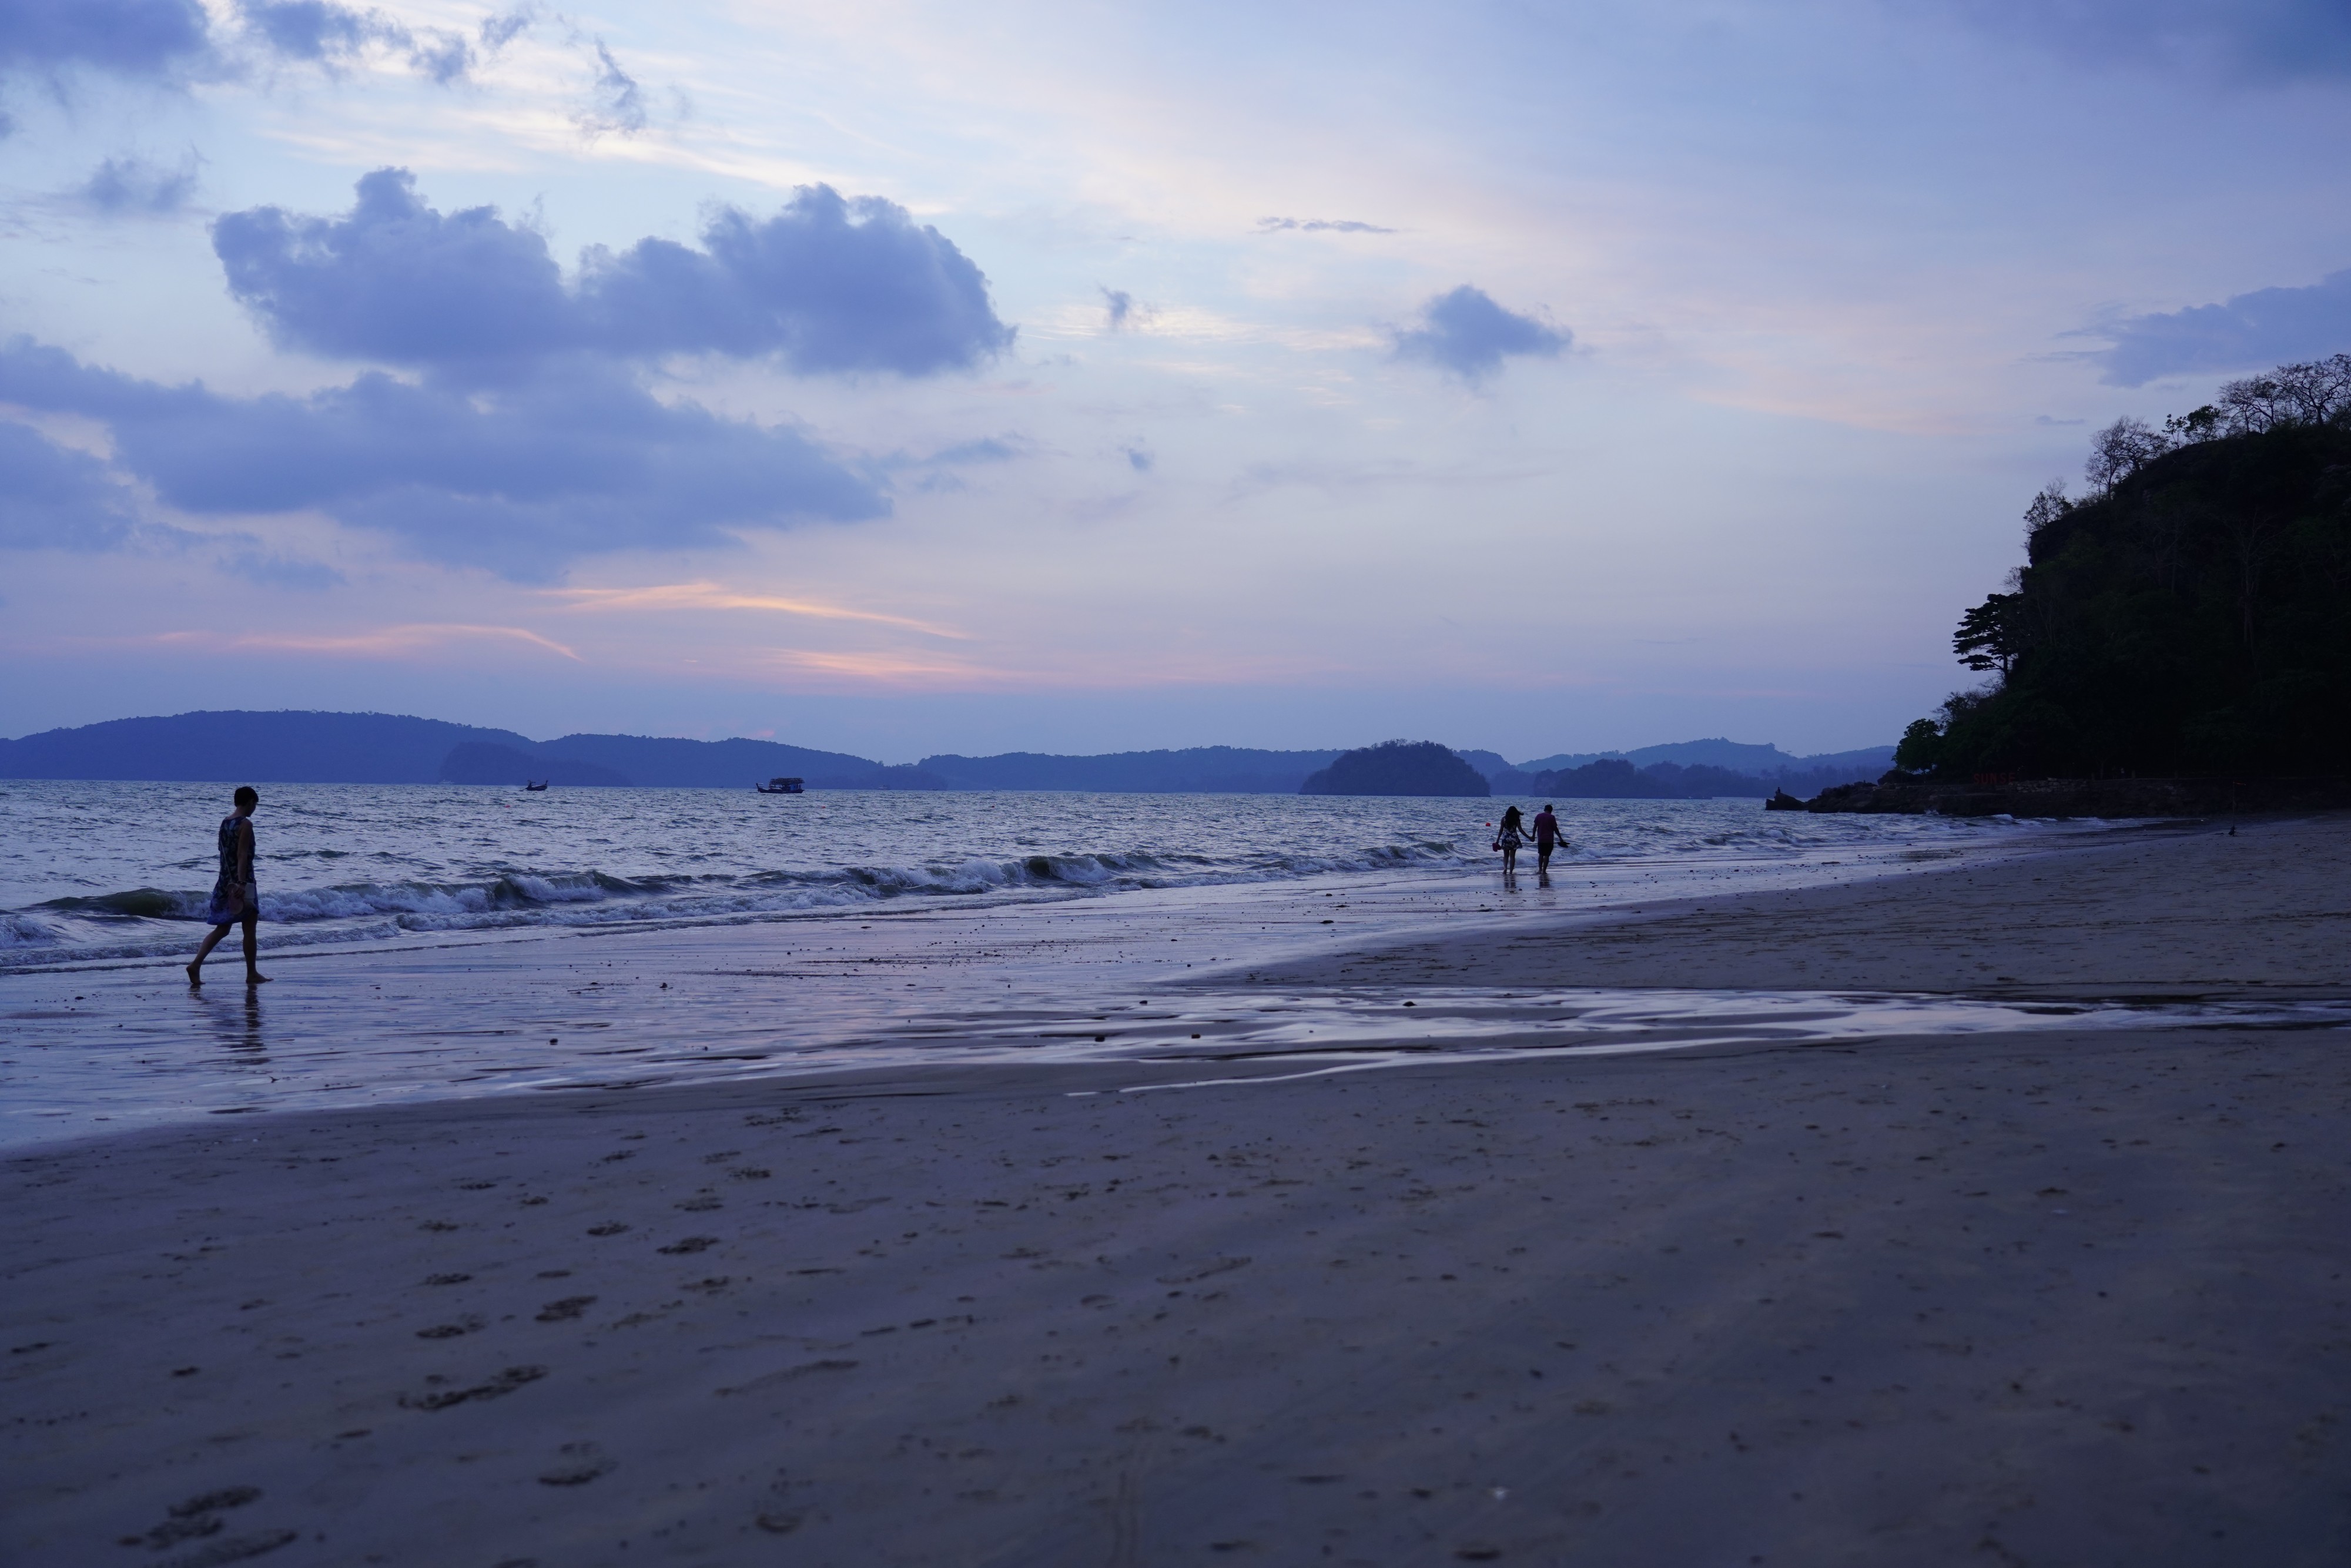 A view of Ao Nang beach, Krabi